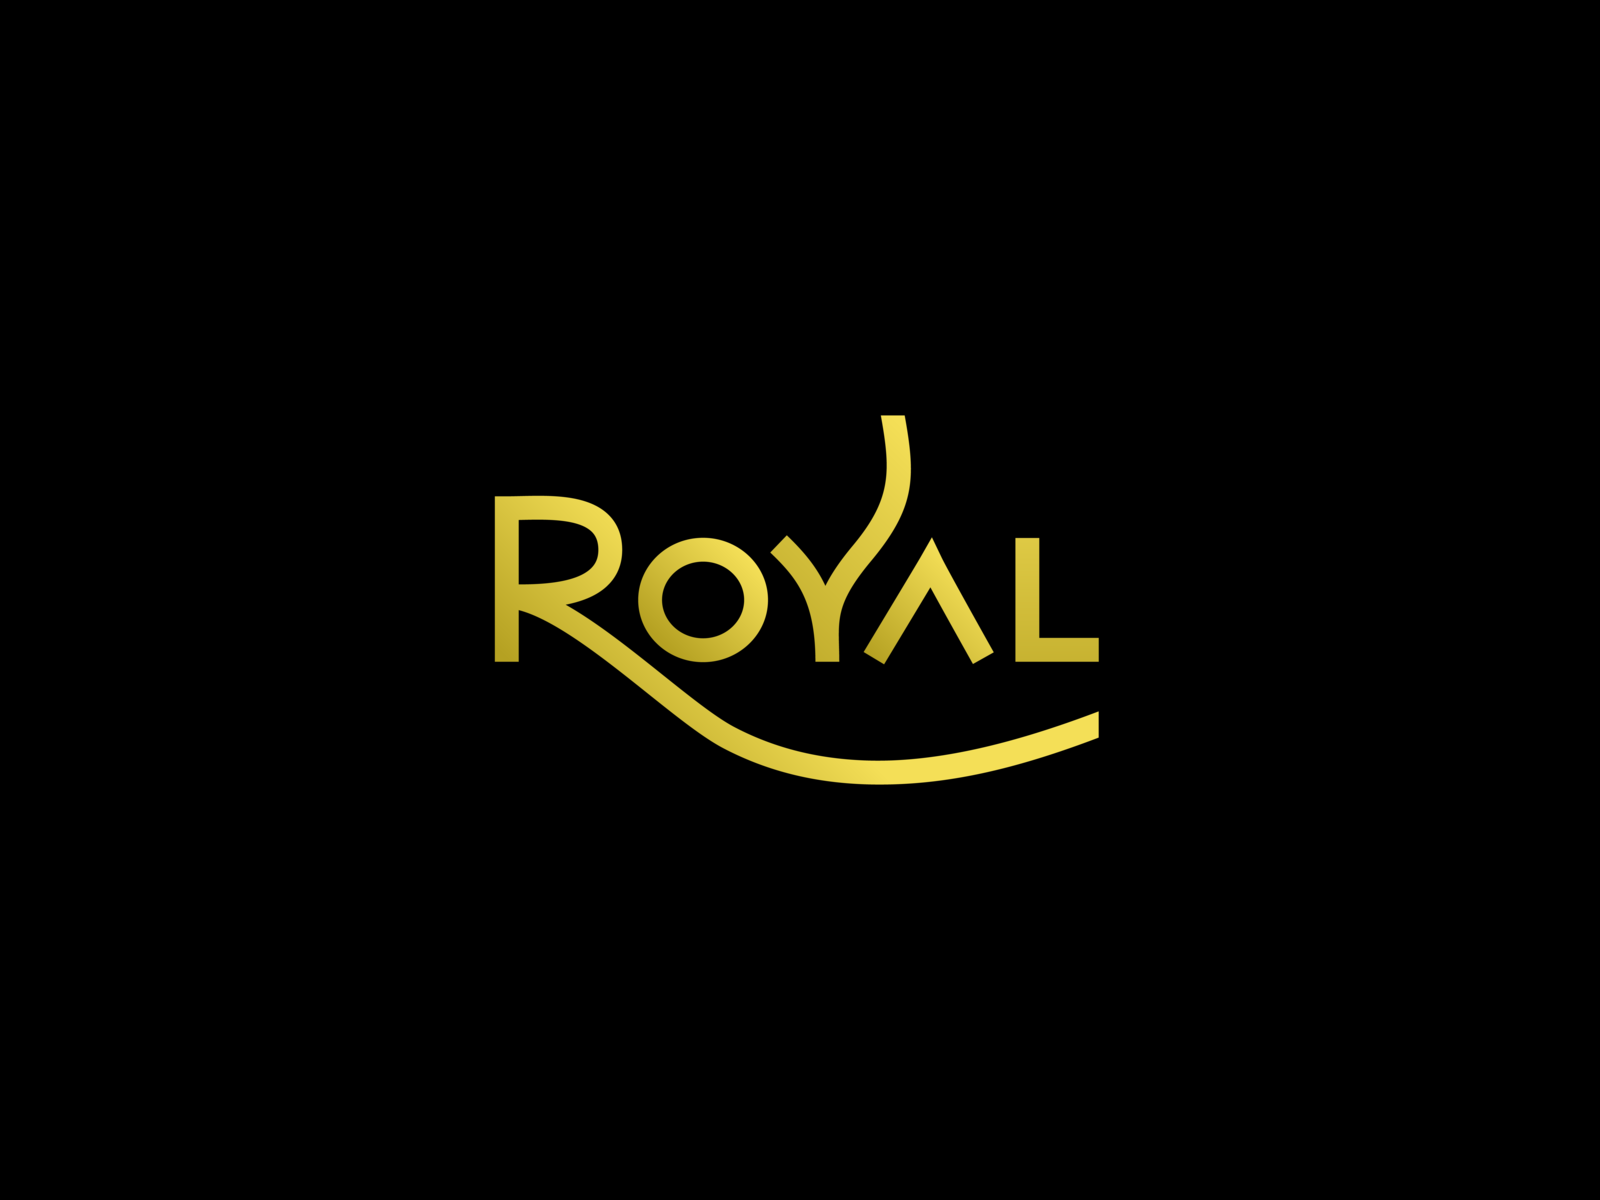 King Royal Logo | Royal logo, Travel logo, Royal